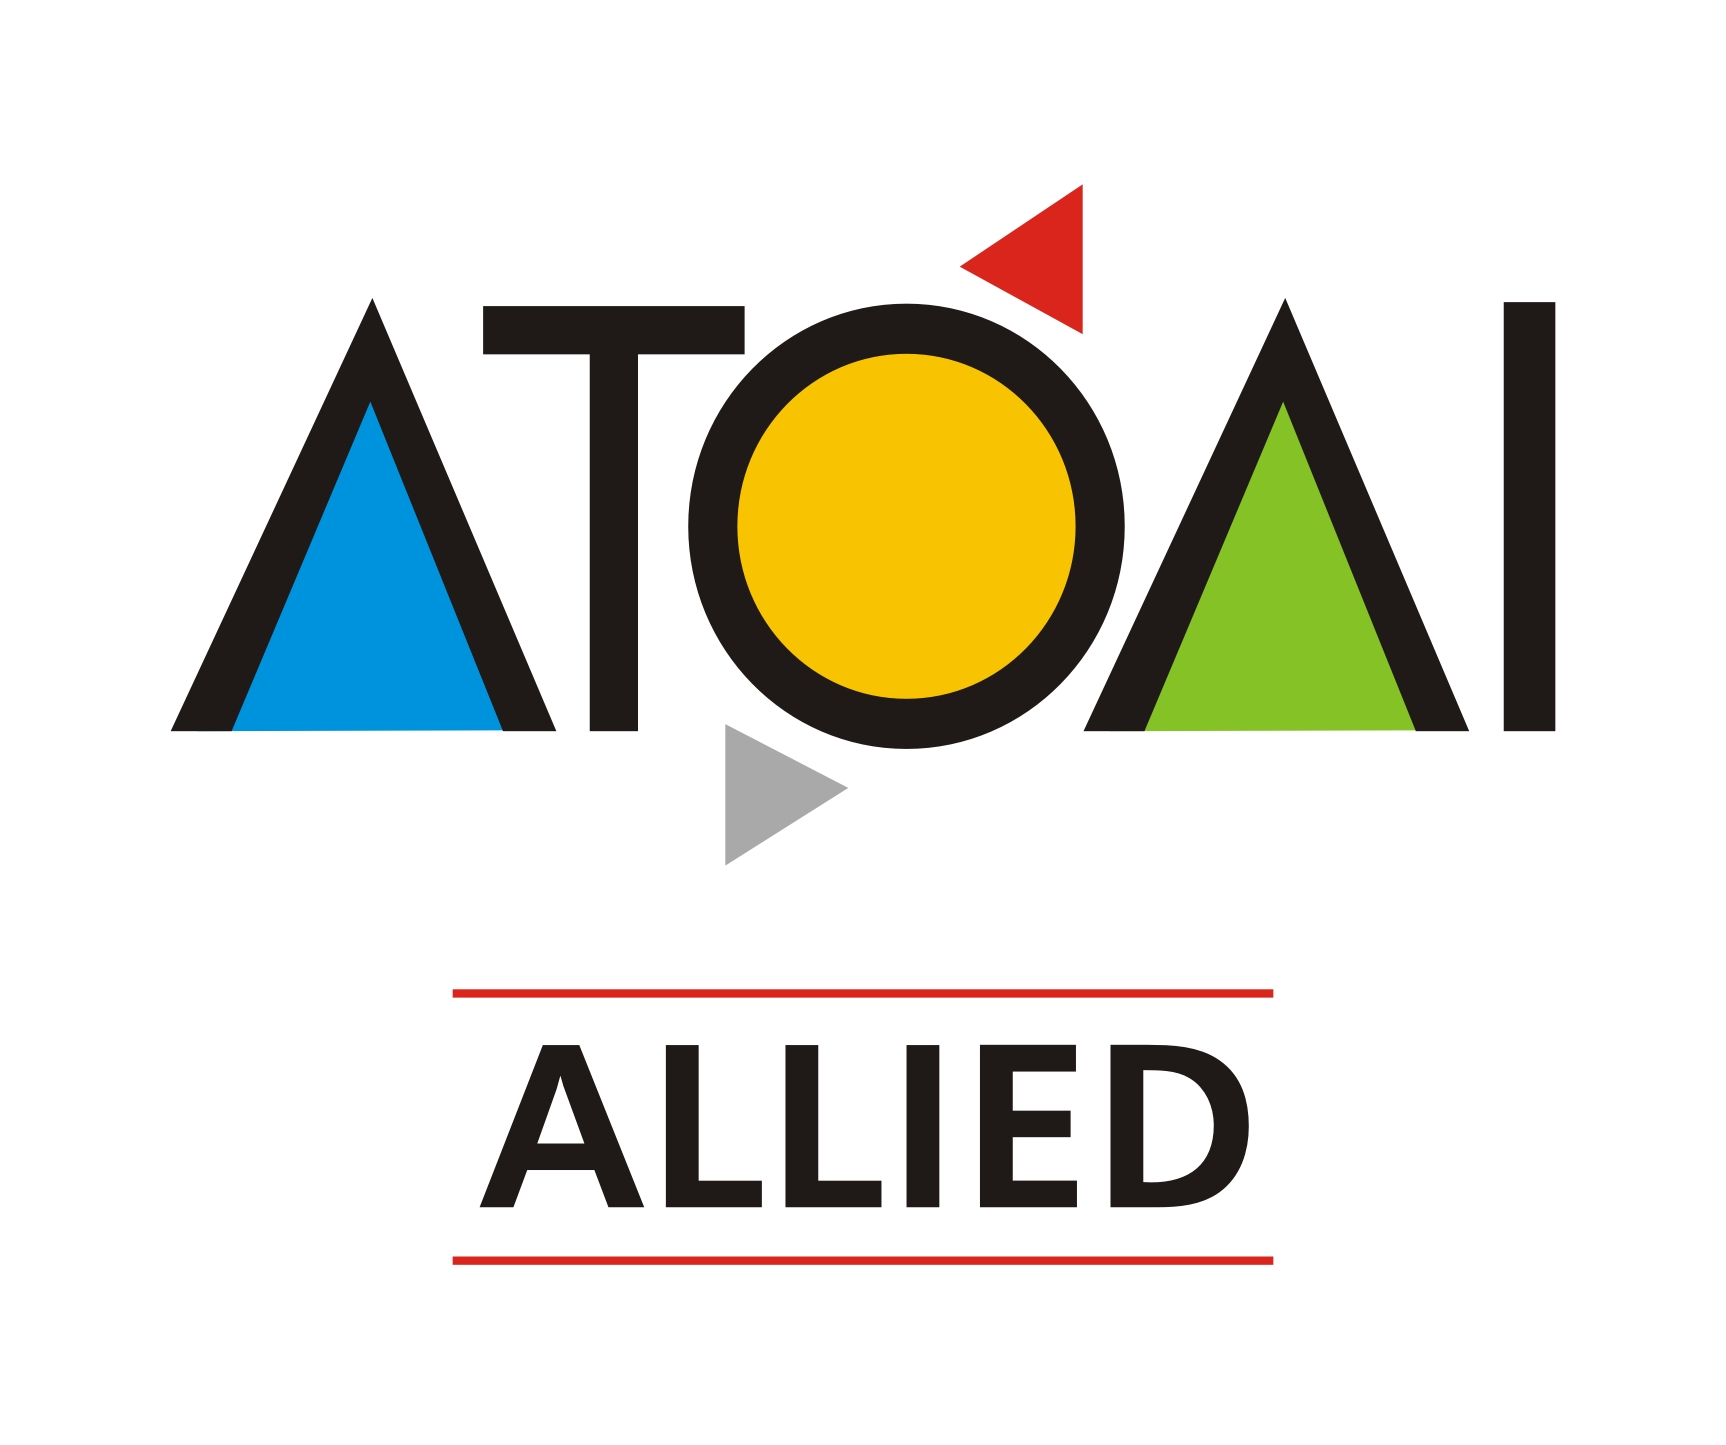 ALLIED logo